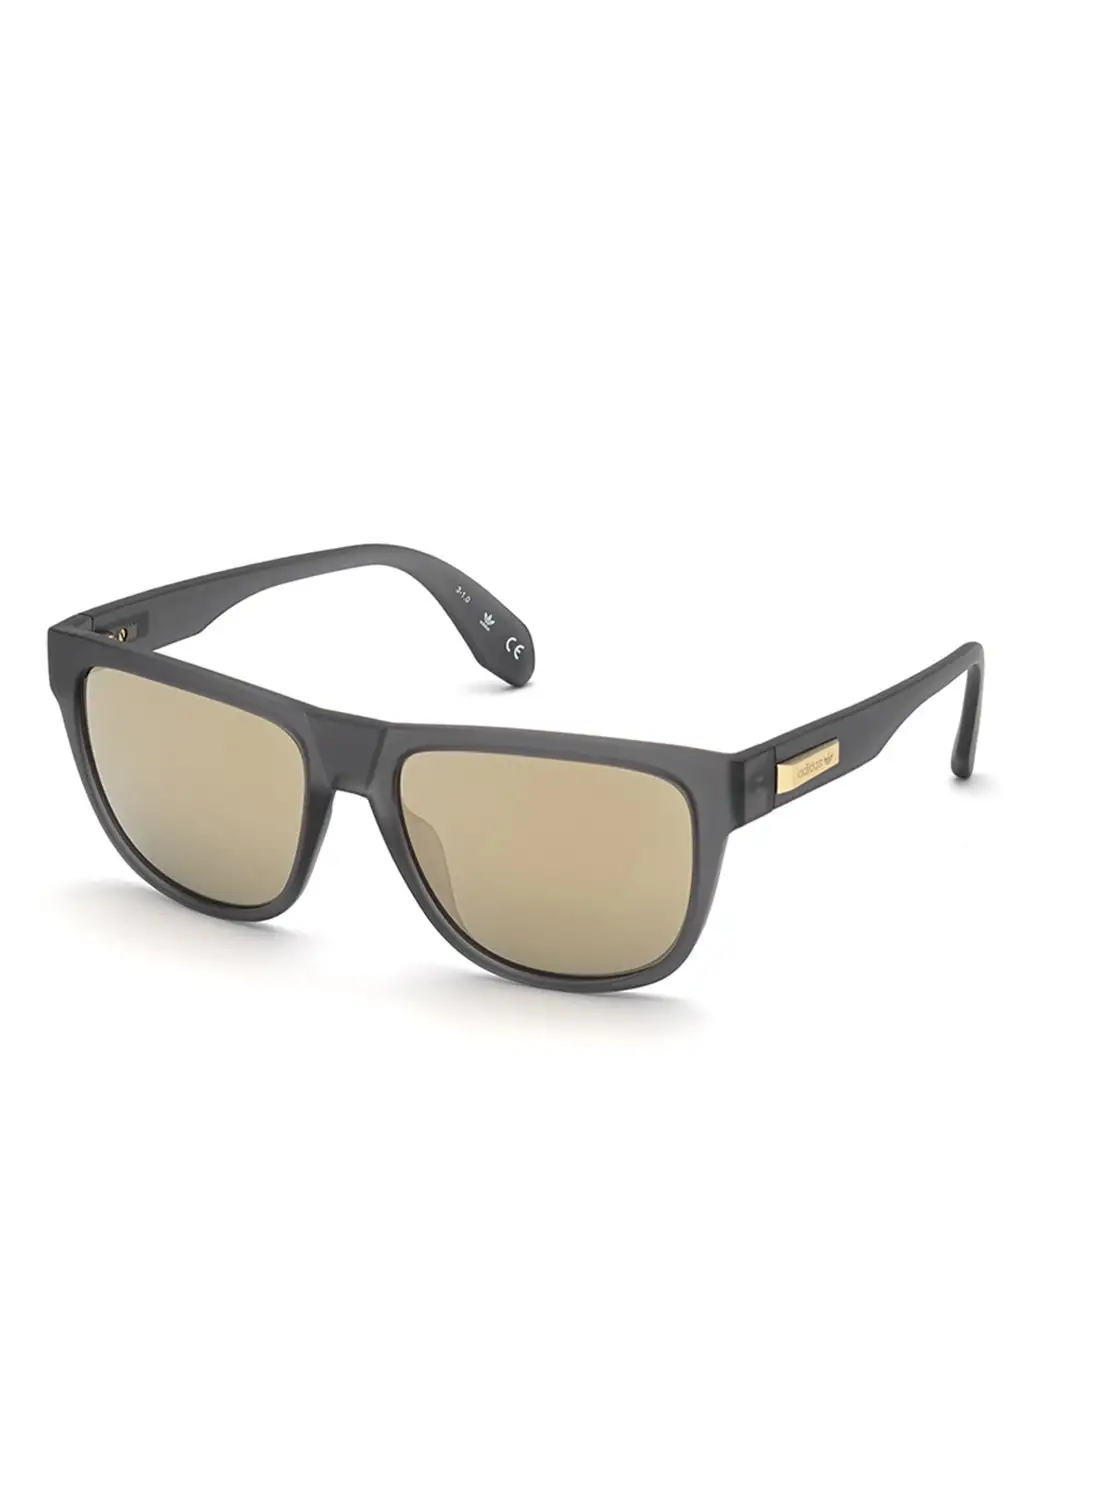 Adidas Unisex UV Protection Navigator Shape Sunglasses - OR003520G56 - Lens Size: 56 Mm